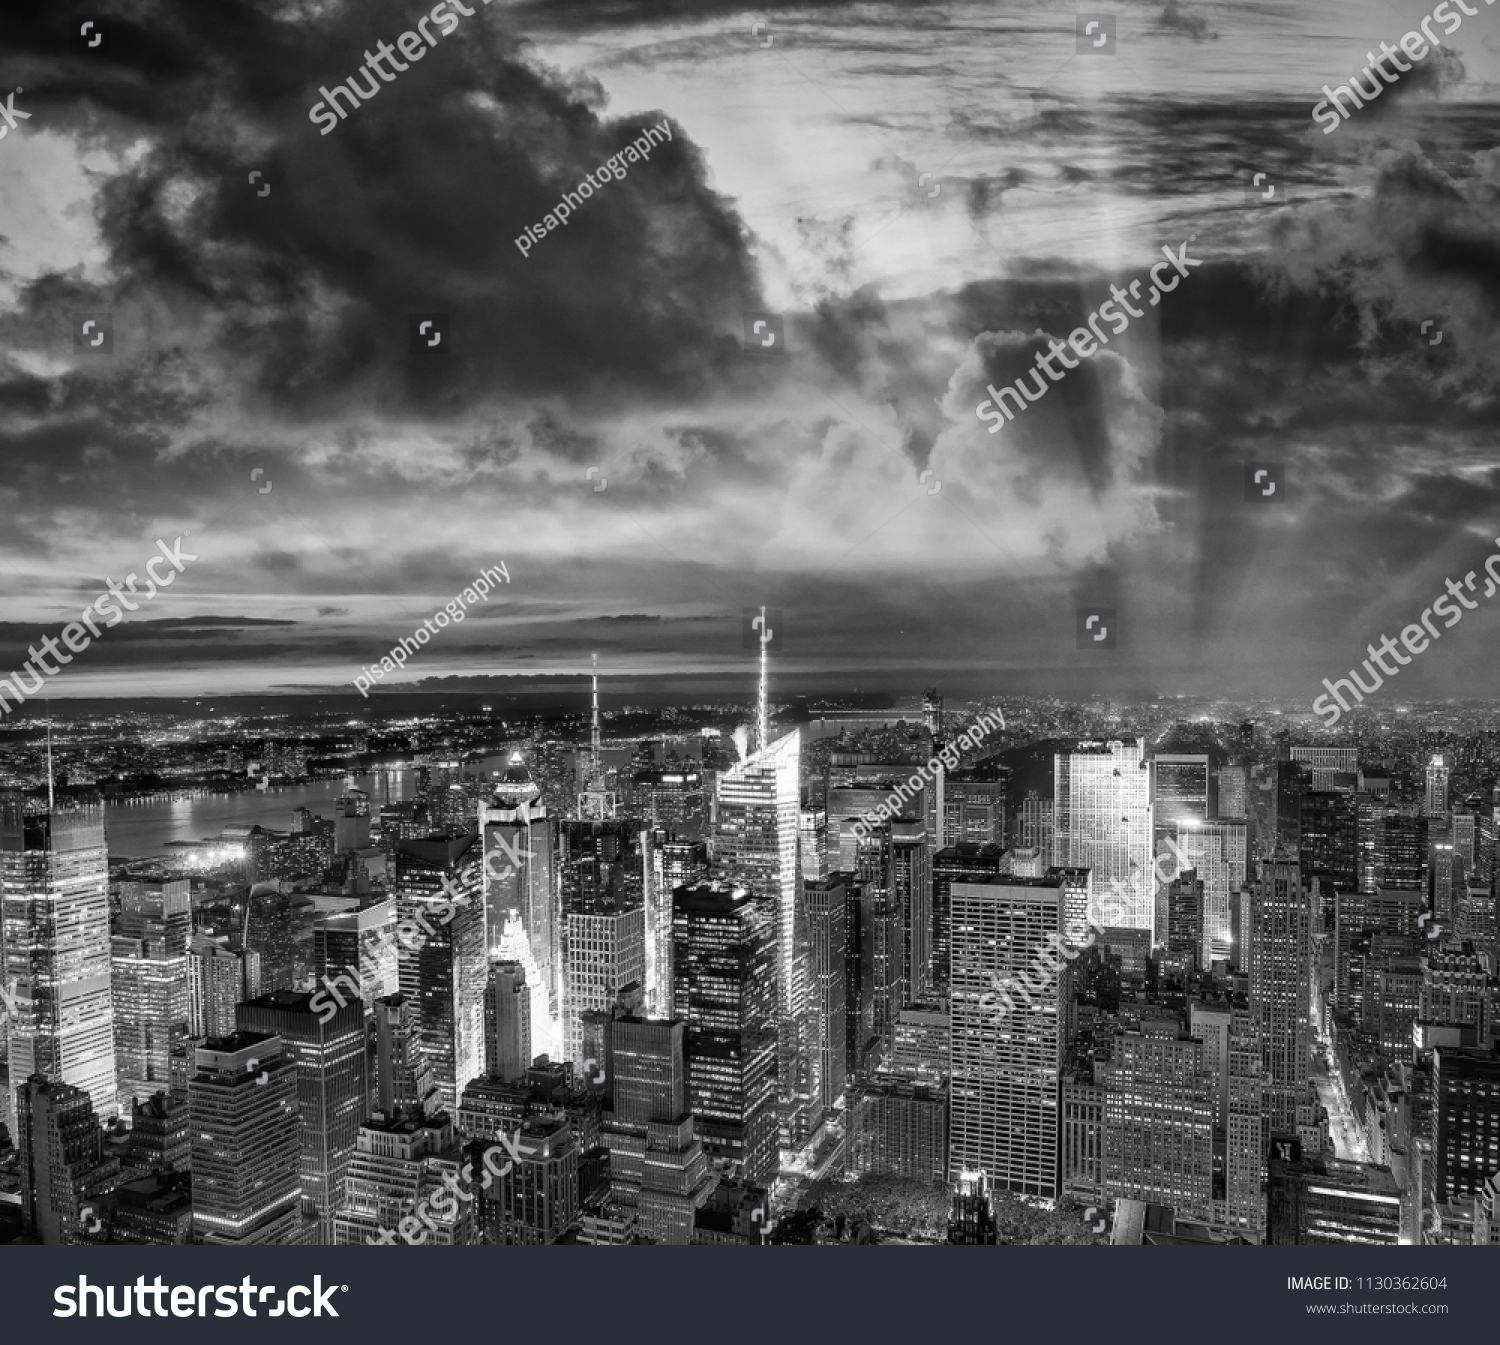 Night aerial view of Midtown skyscrapers. #1130362604